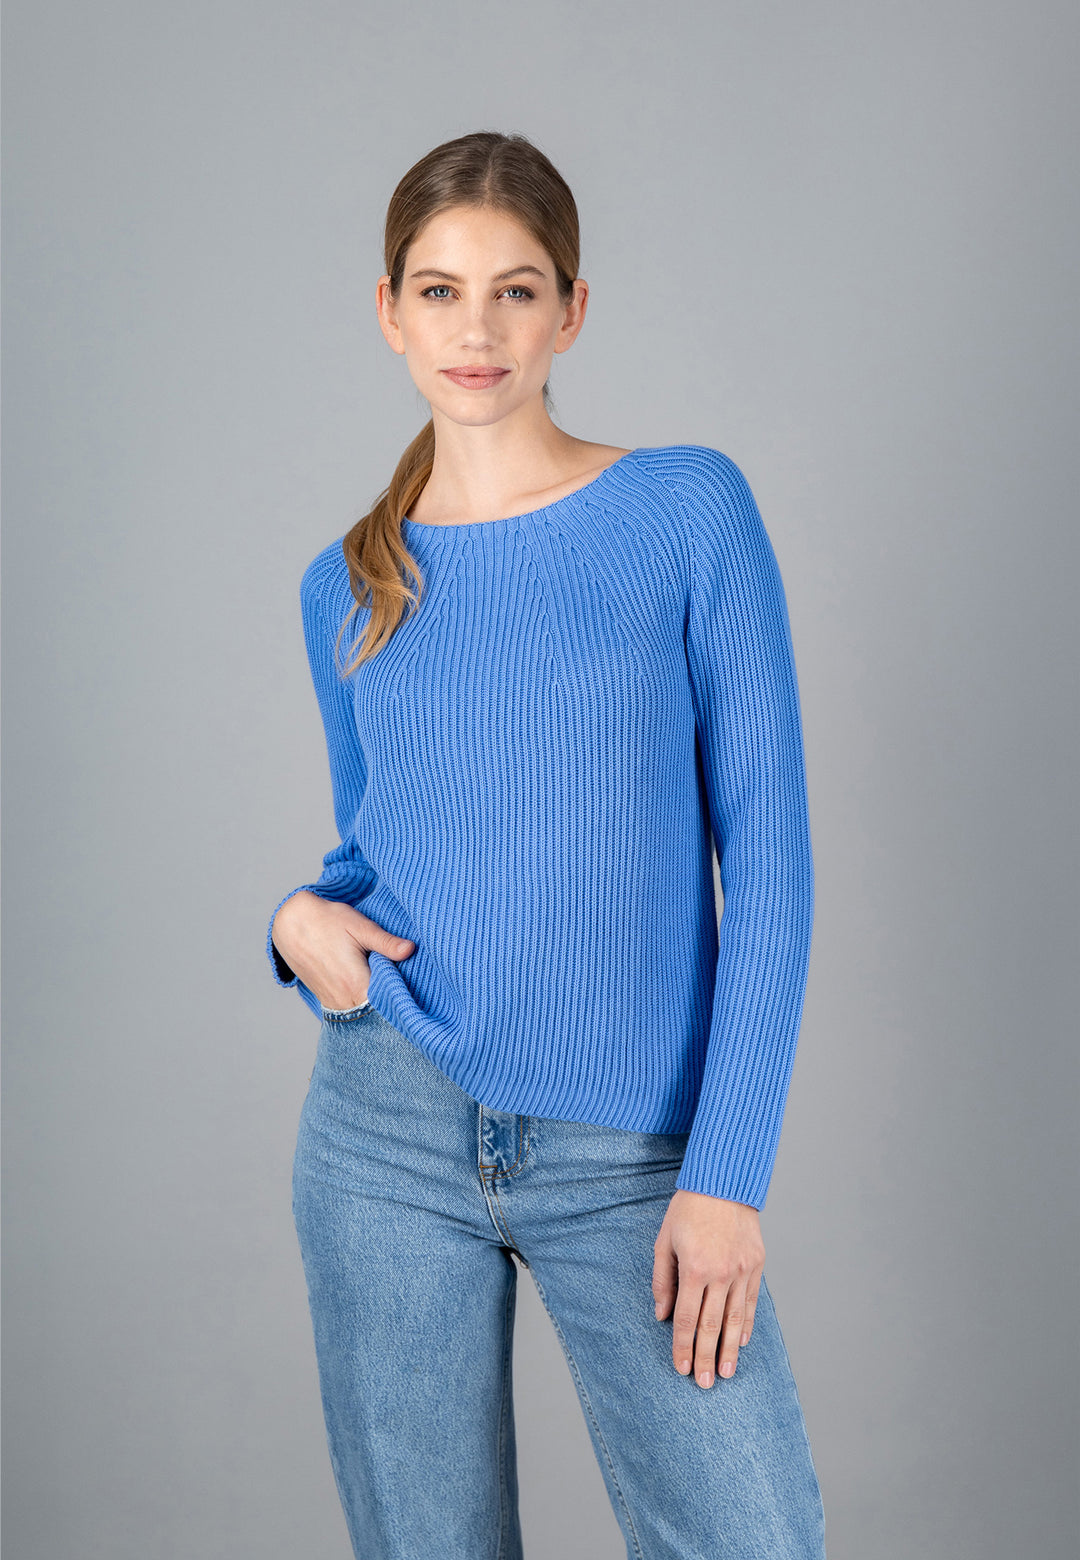 & HATTON Fynch-Hatton | Online Official Ladies Offizieller FYNCH- Shop | Online Sweaters Cardigans – Shop